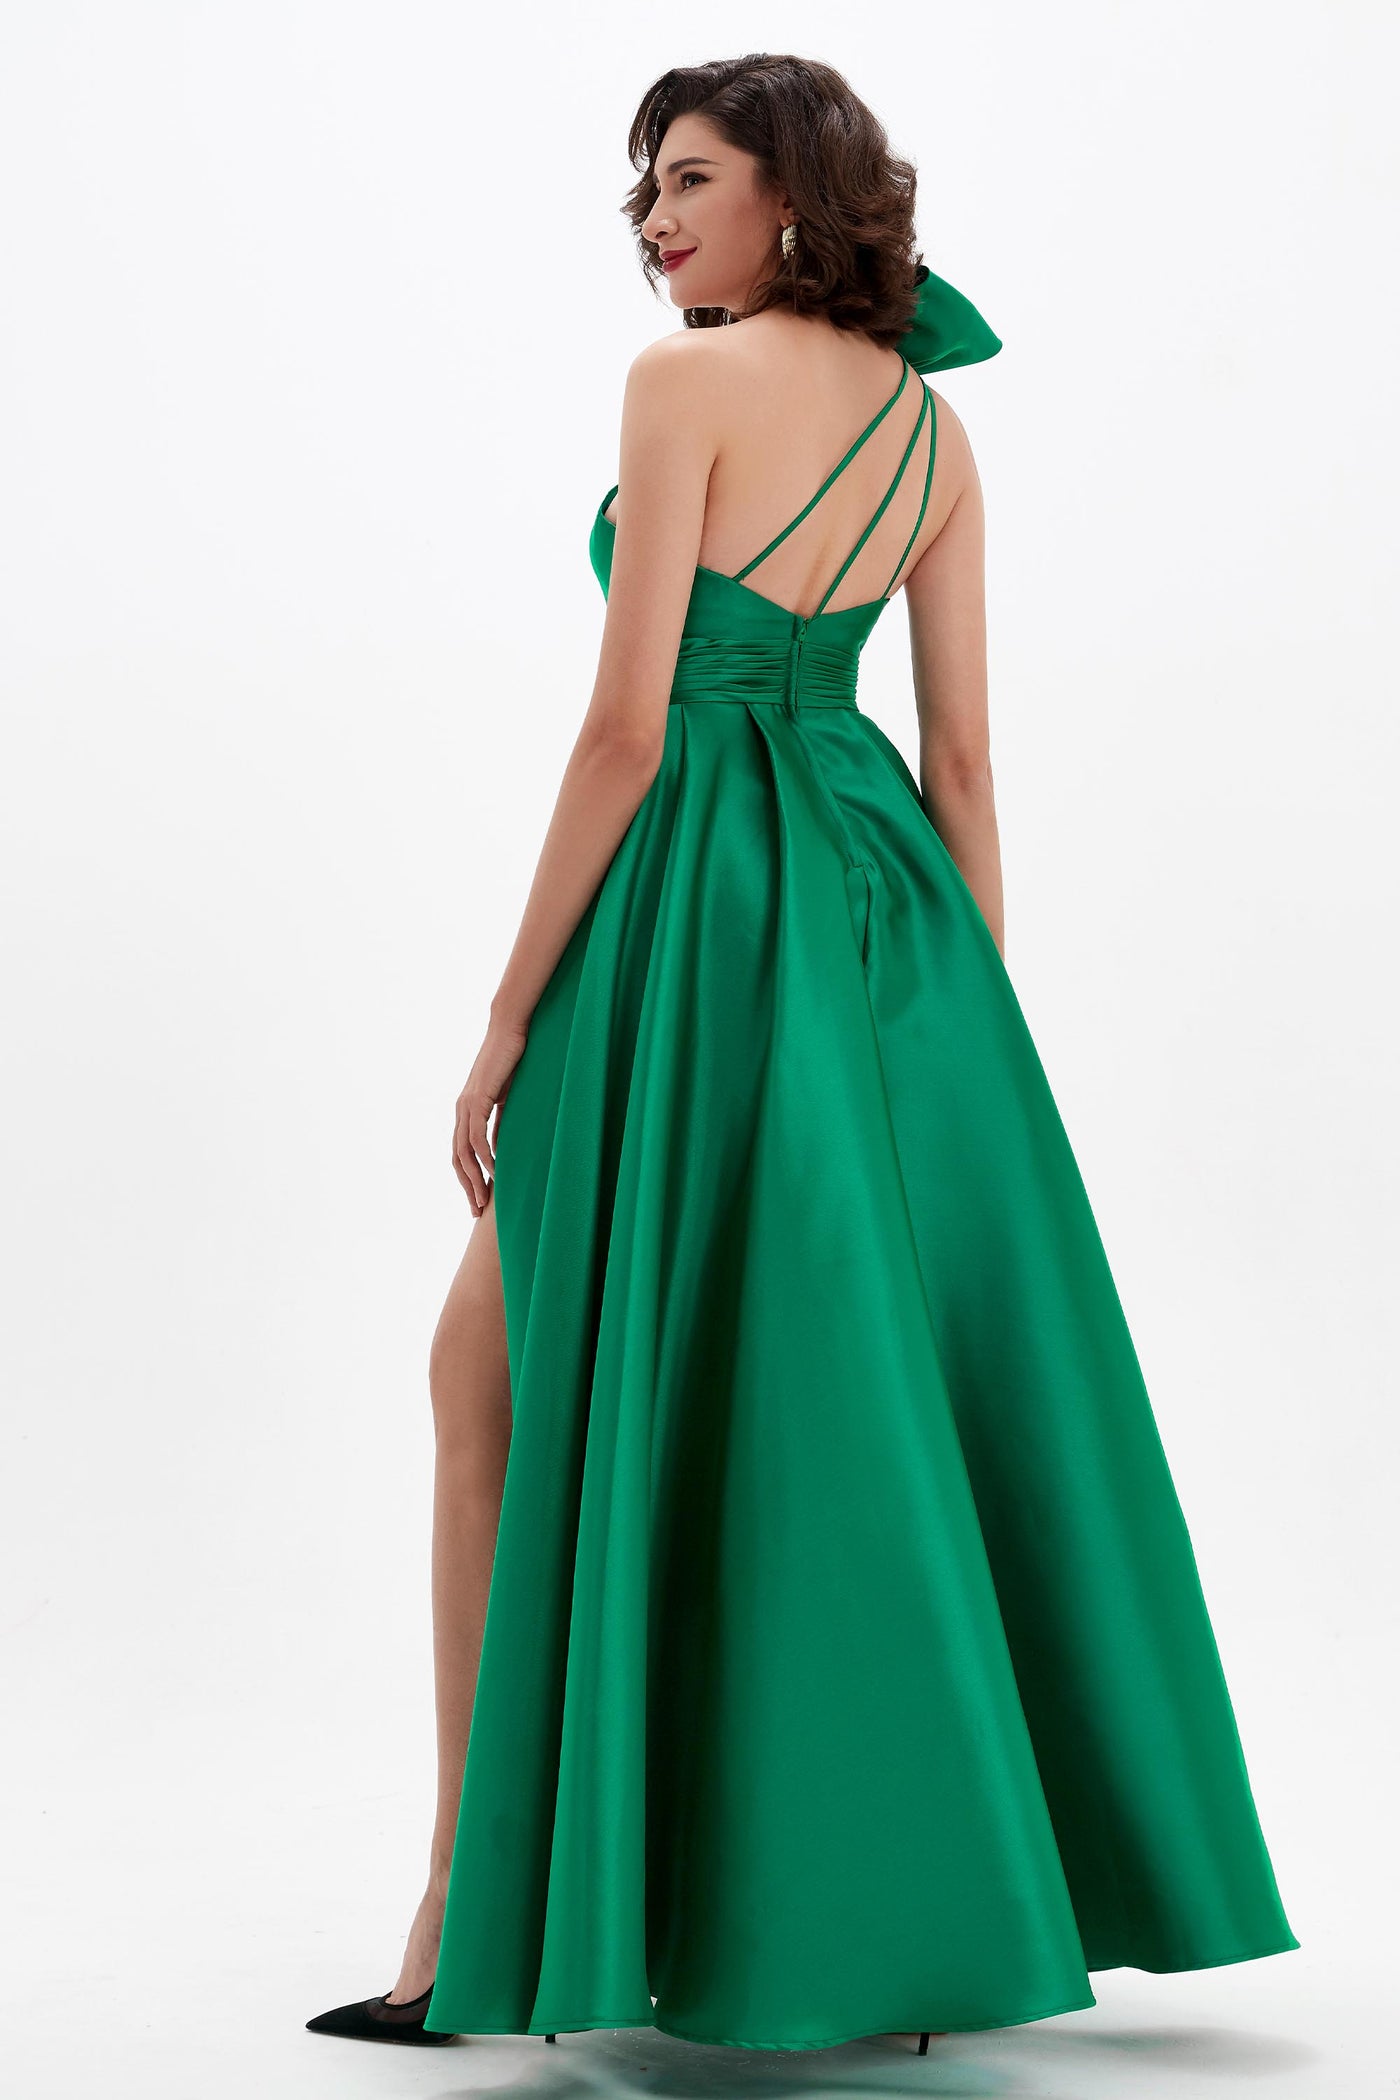 Green One Shoulder High Slit Long Party Prom Dress